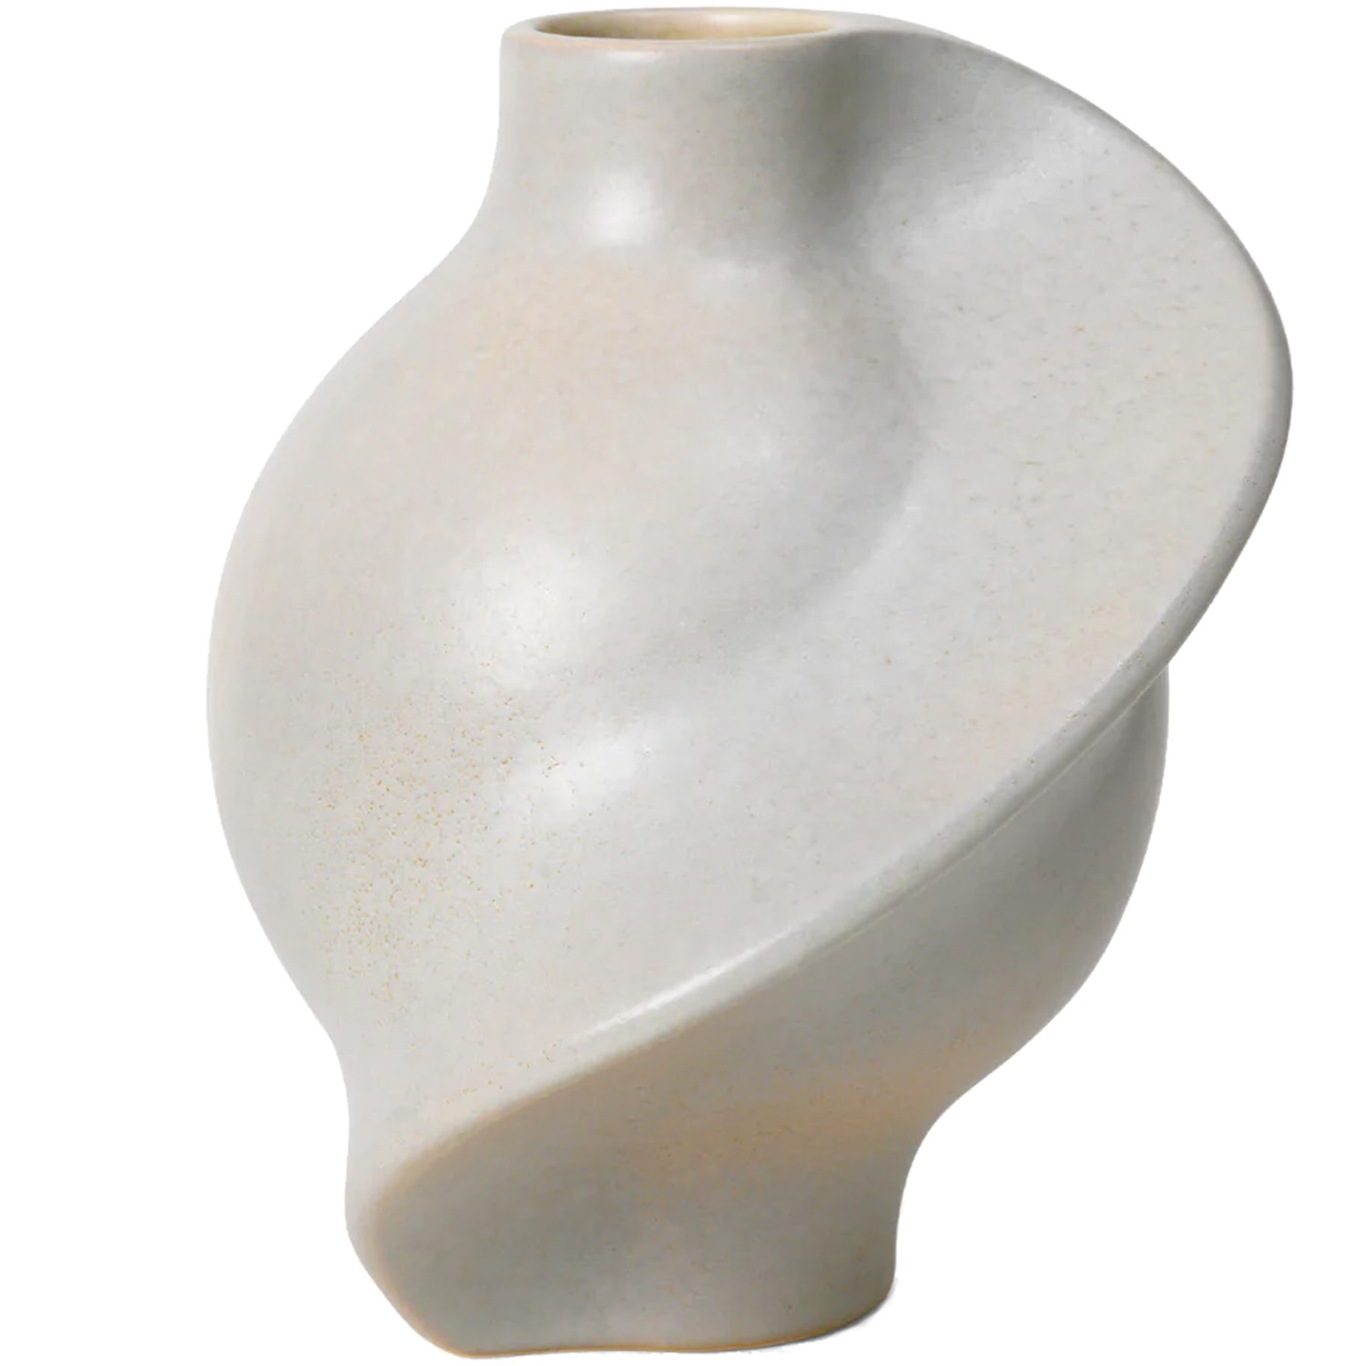 Pirout 02 Vase 42 cm, Vintage Glaze